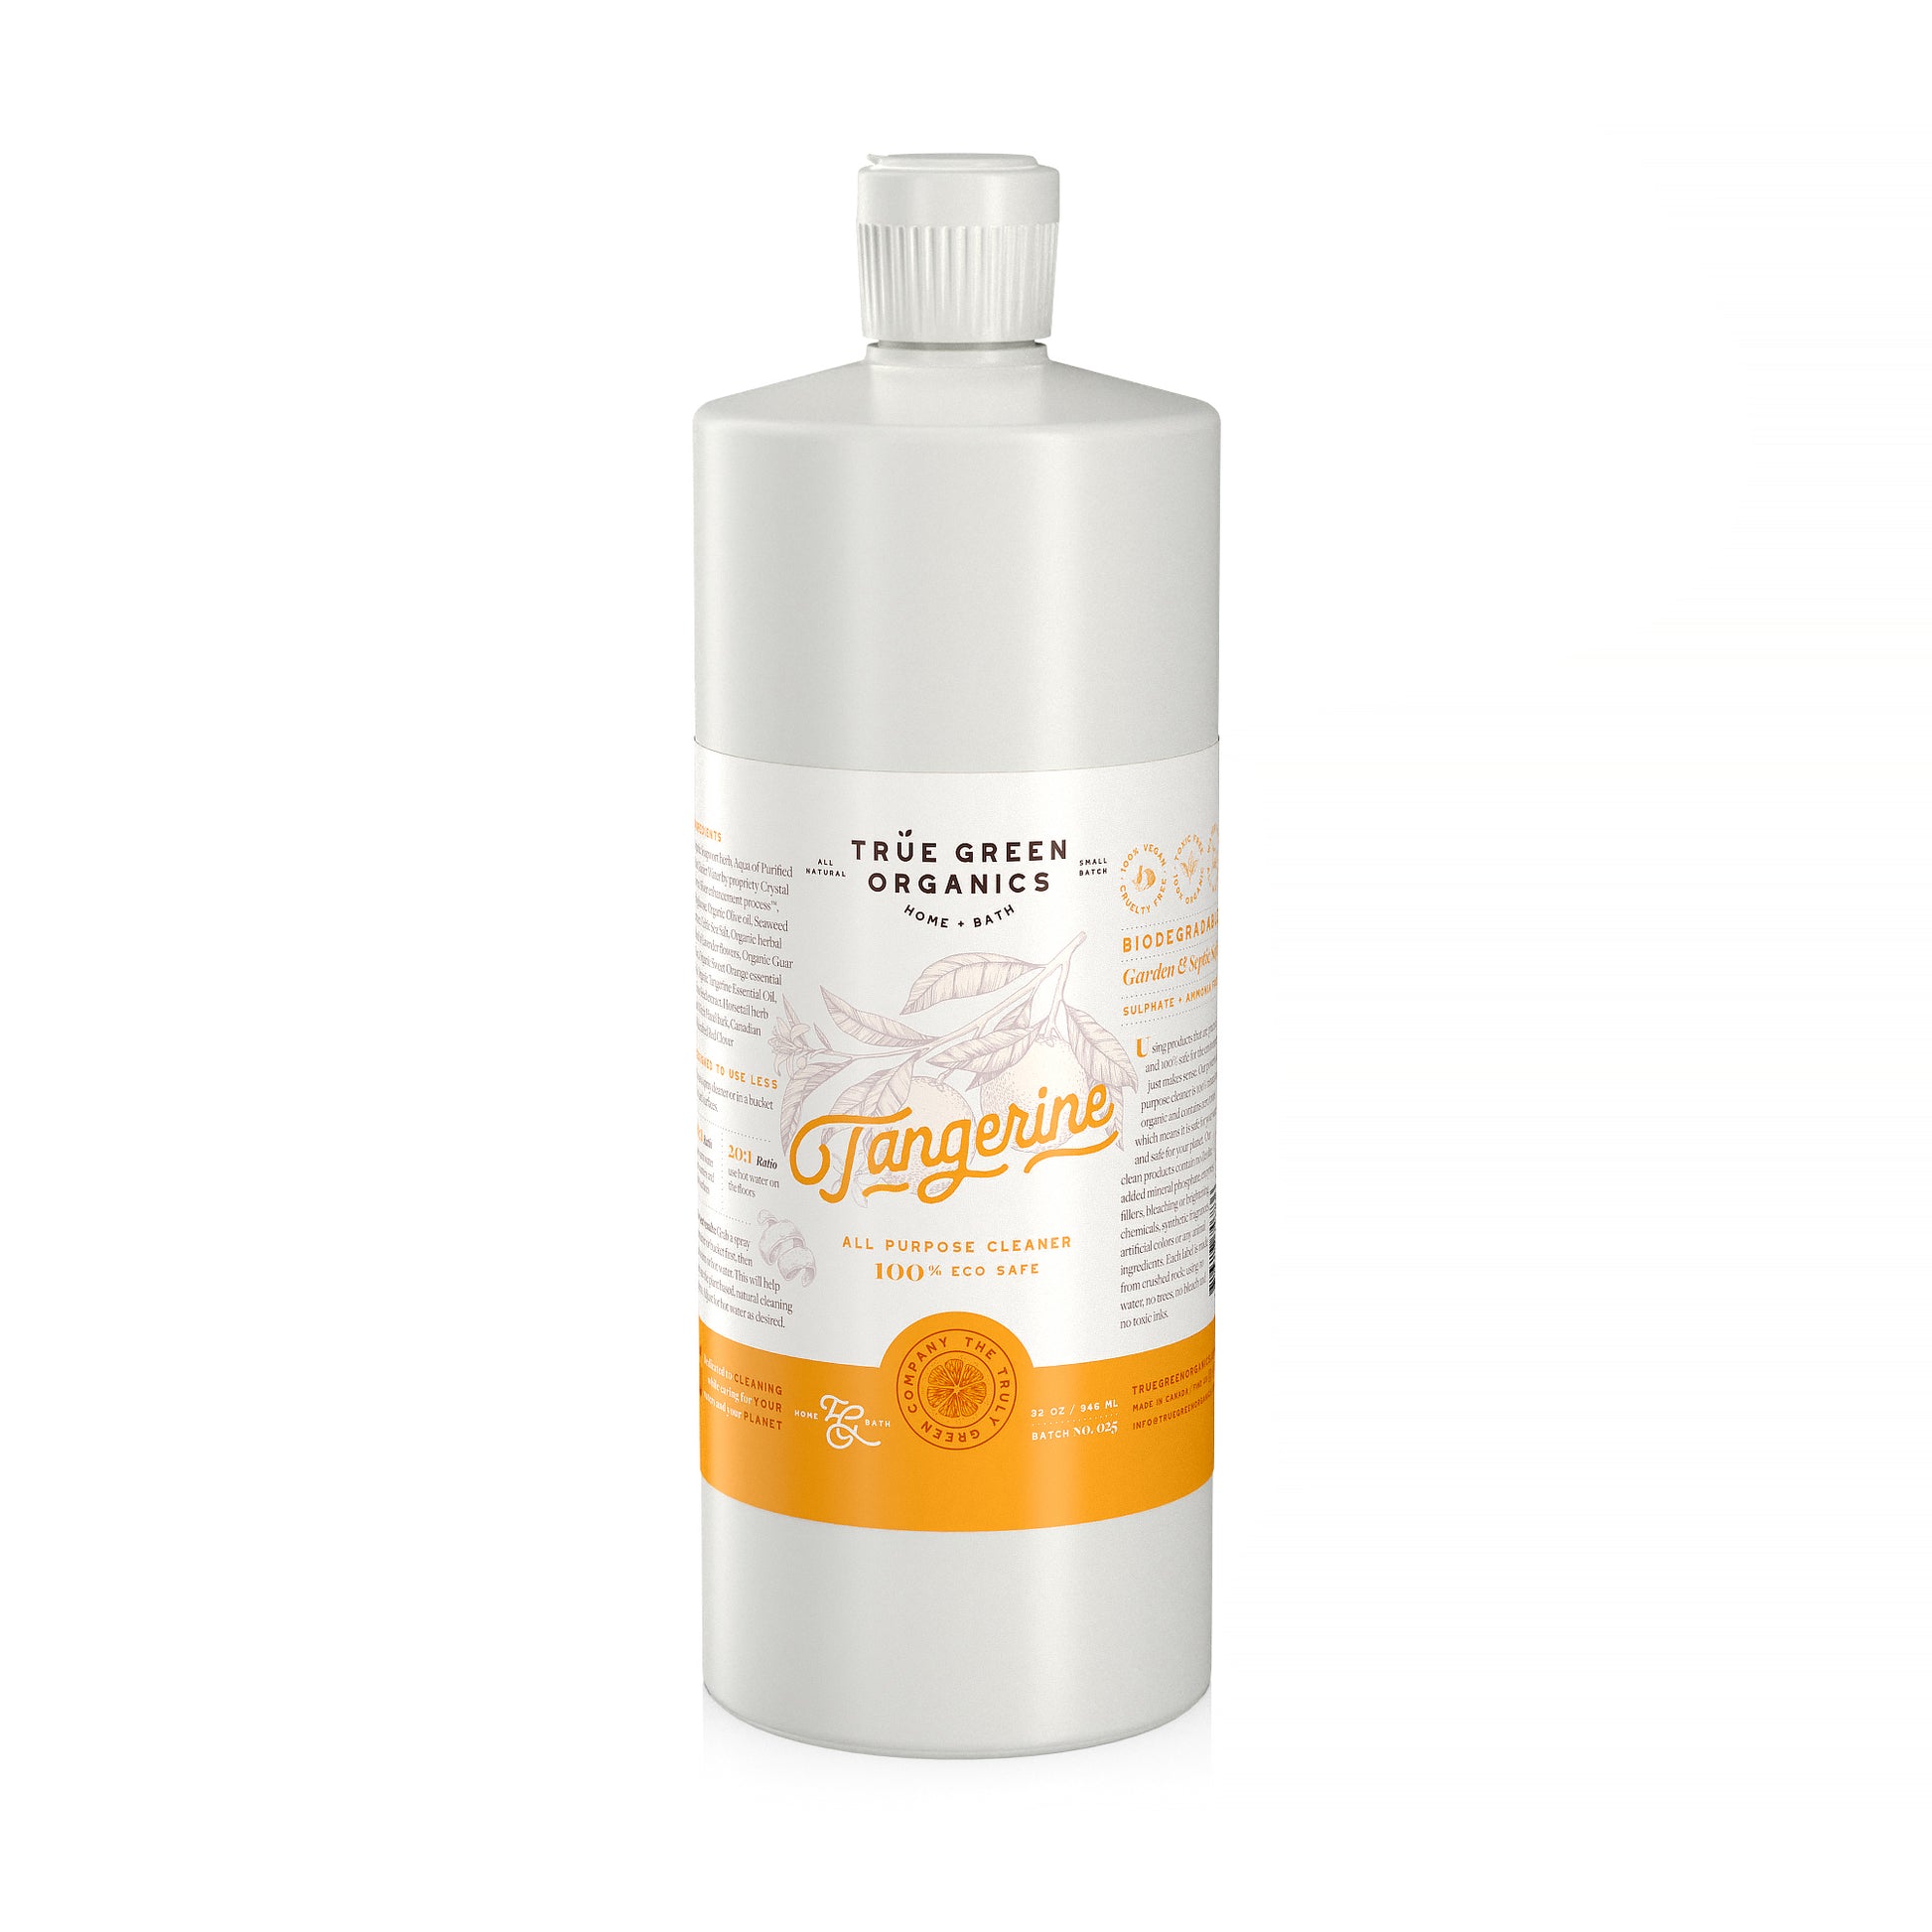 True Green Organics Tangerine Clean All Purpose Cleaner 32oz Bottle